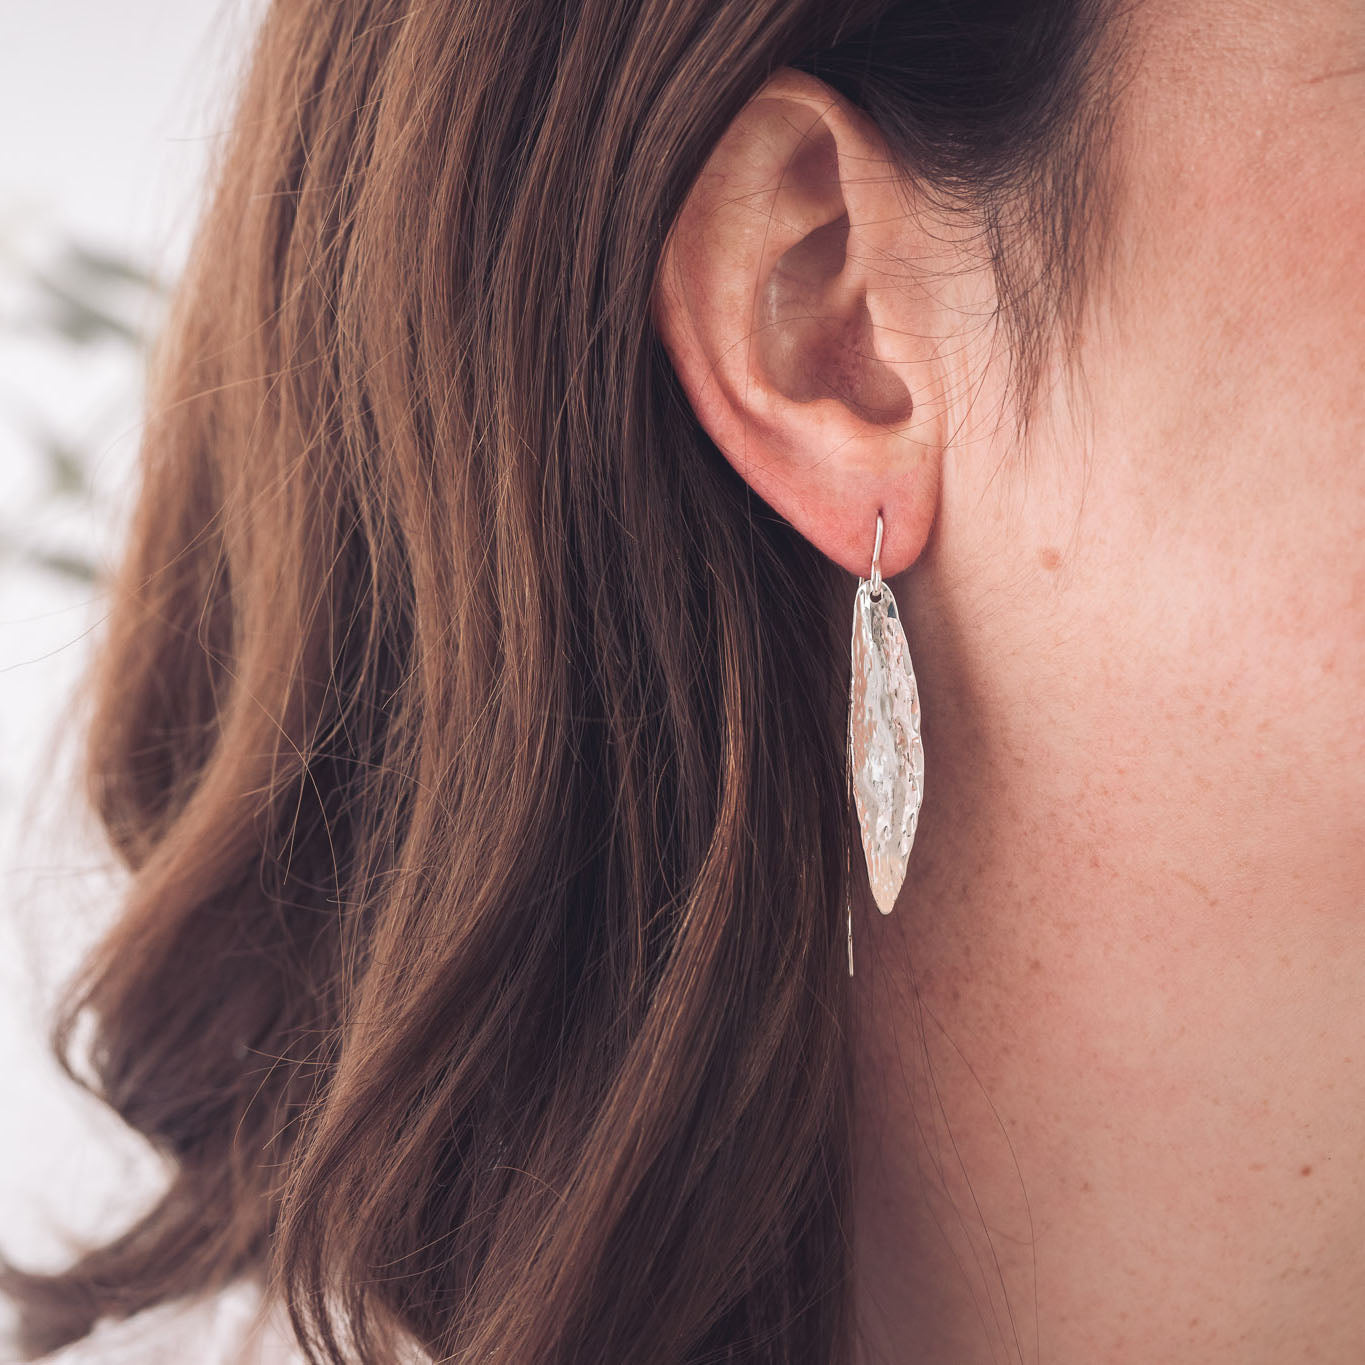 Handmade Delicate Silver Leaf Inspired Earrings